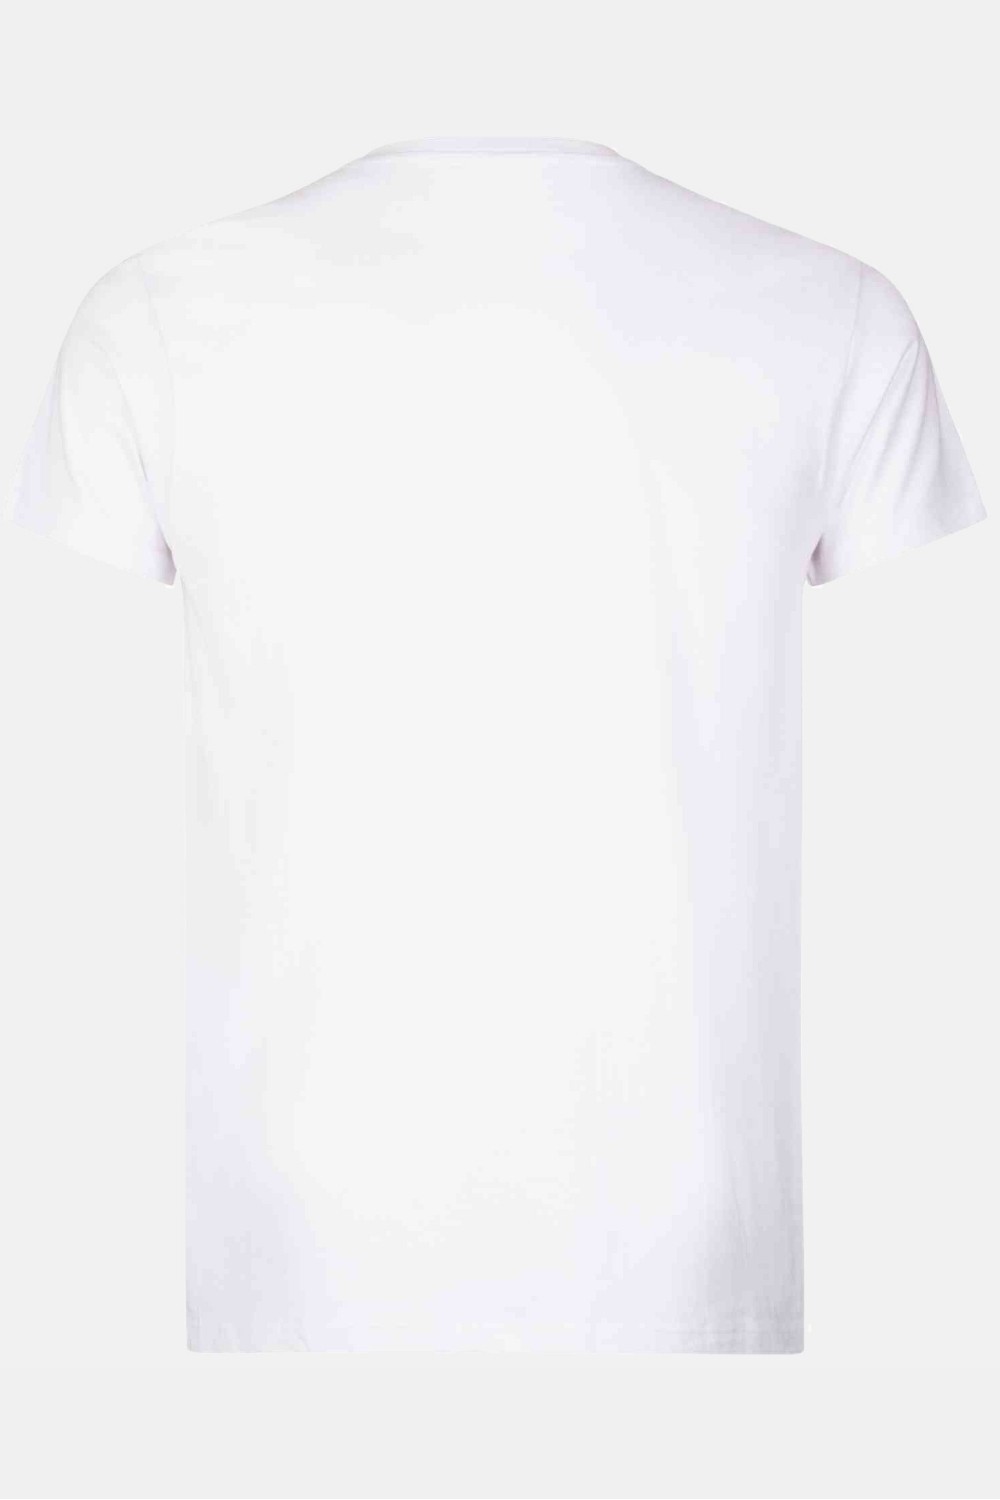 Street tee shirt homme blanc - Patrice Catanzaro Site Officiel